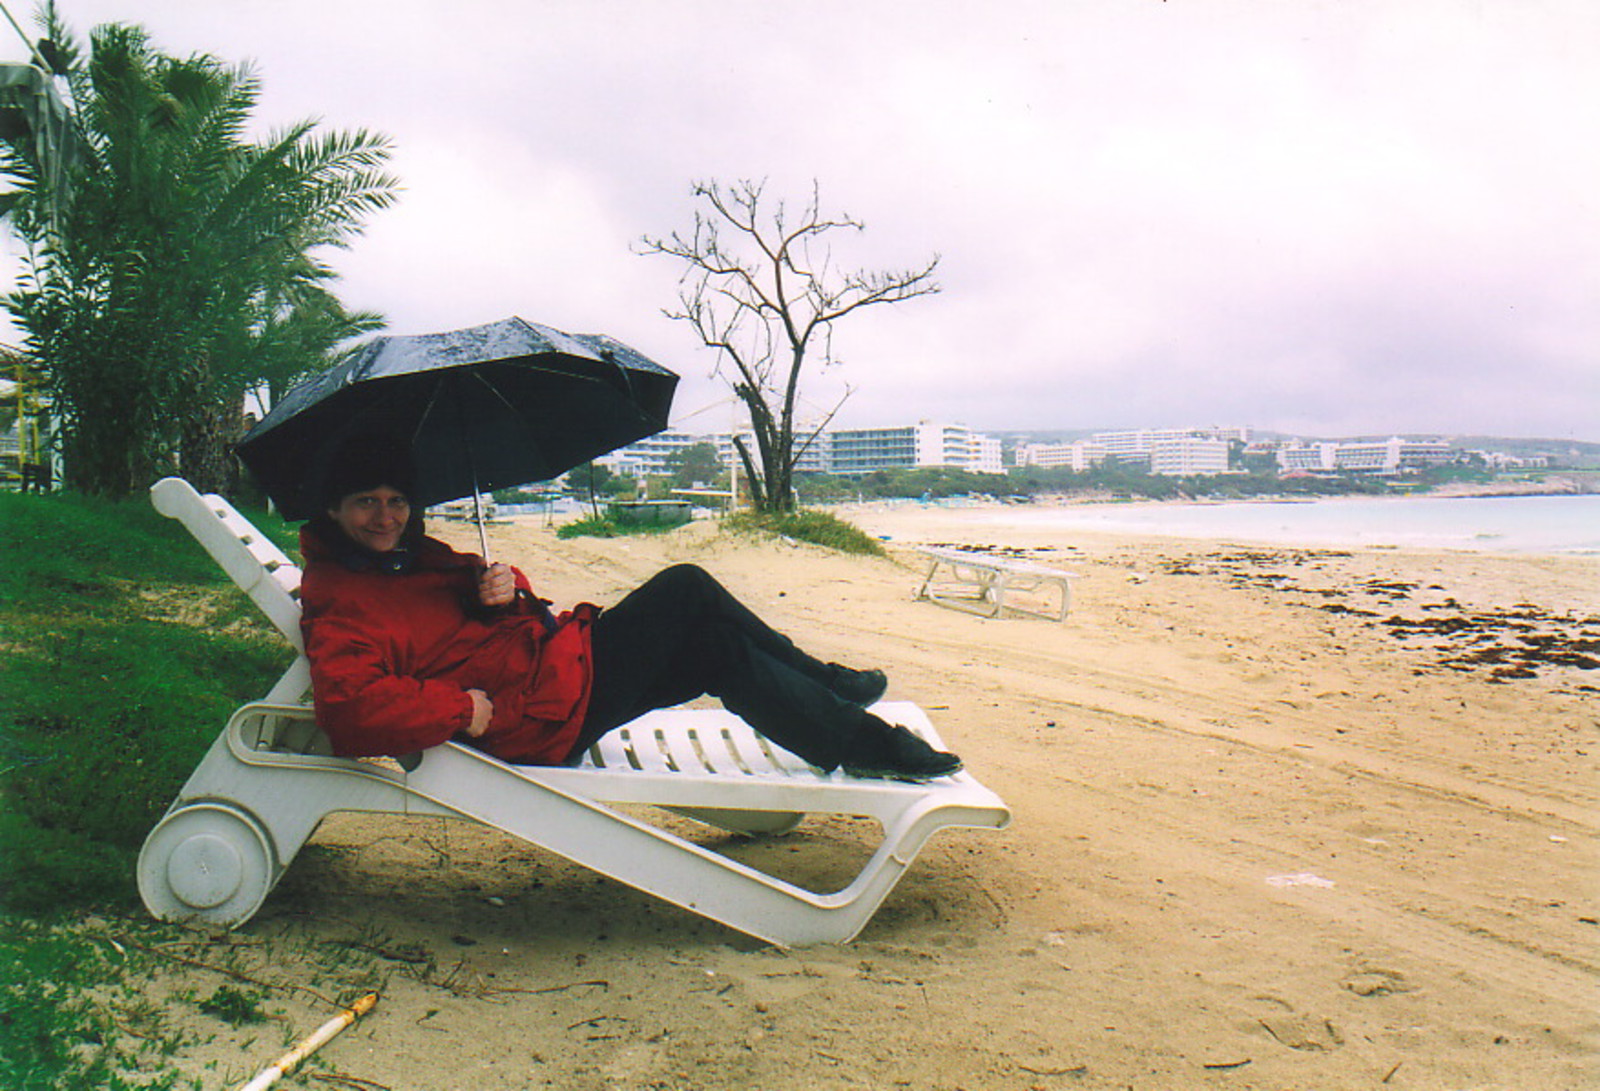 Peta on Agia Napa beach under an umbrella